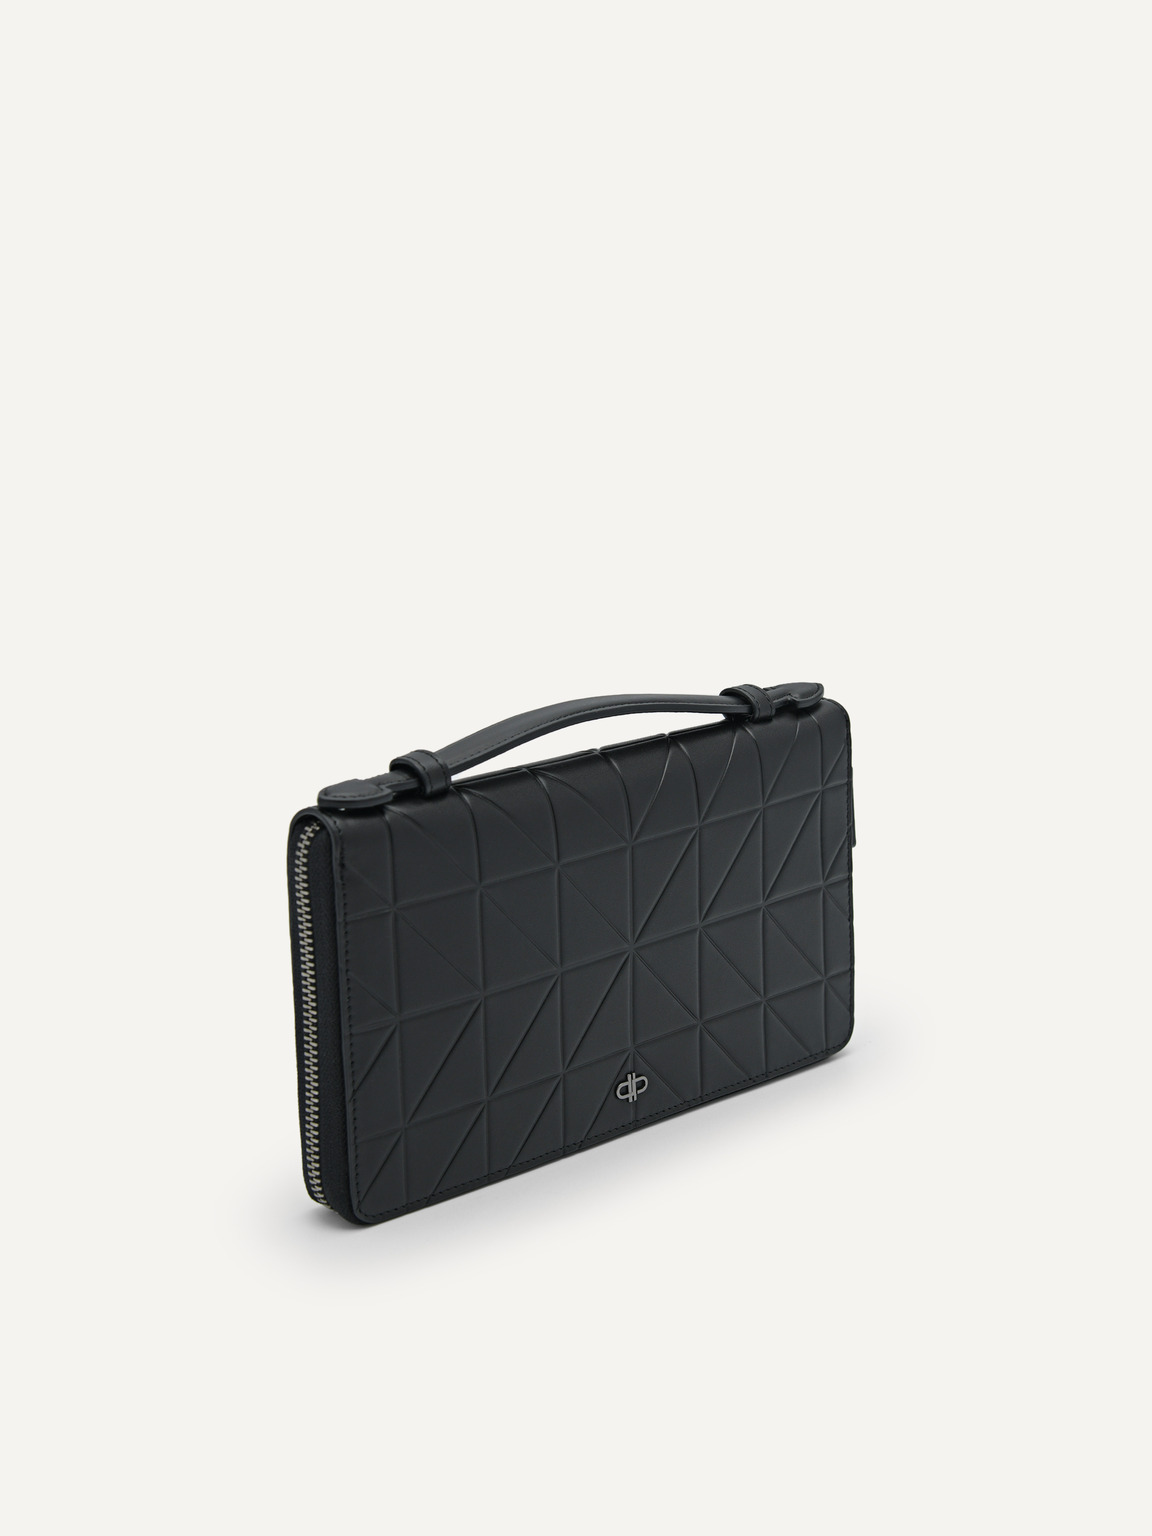 PEDRO Icon Leather Travel Organiser in Pixel, Black